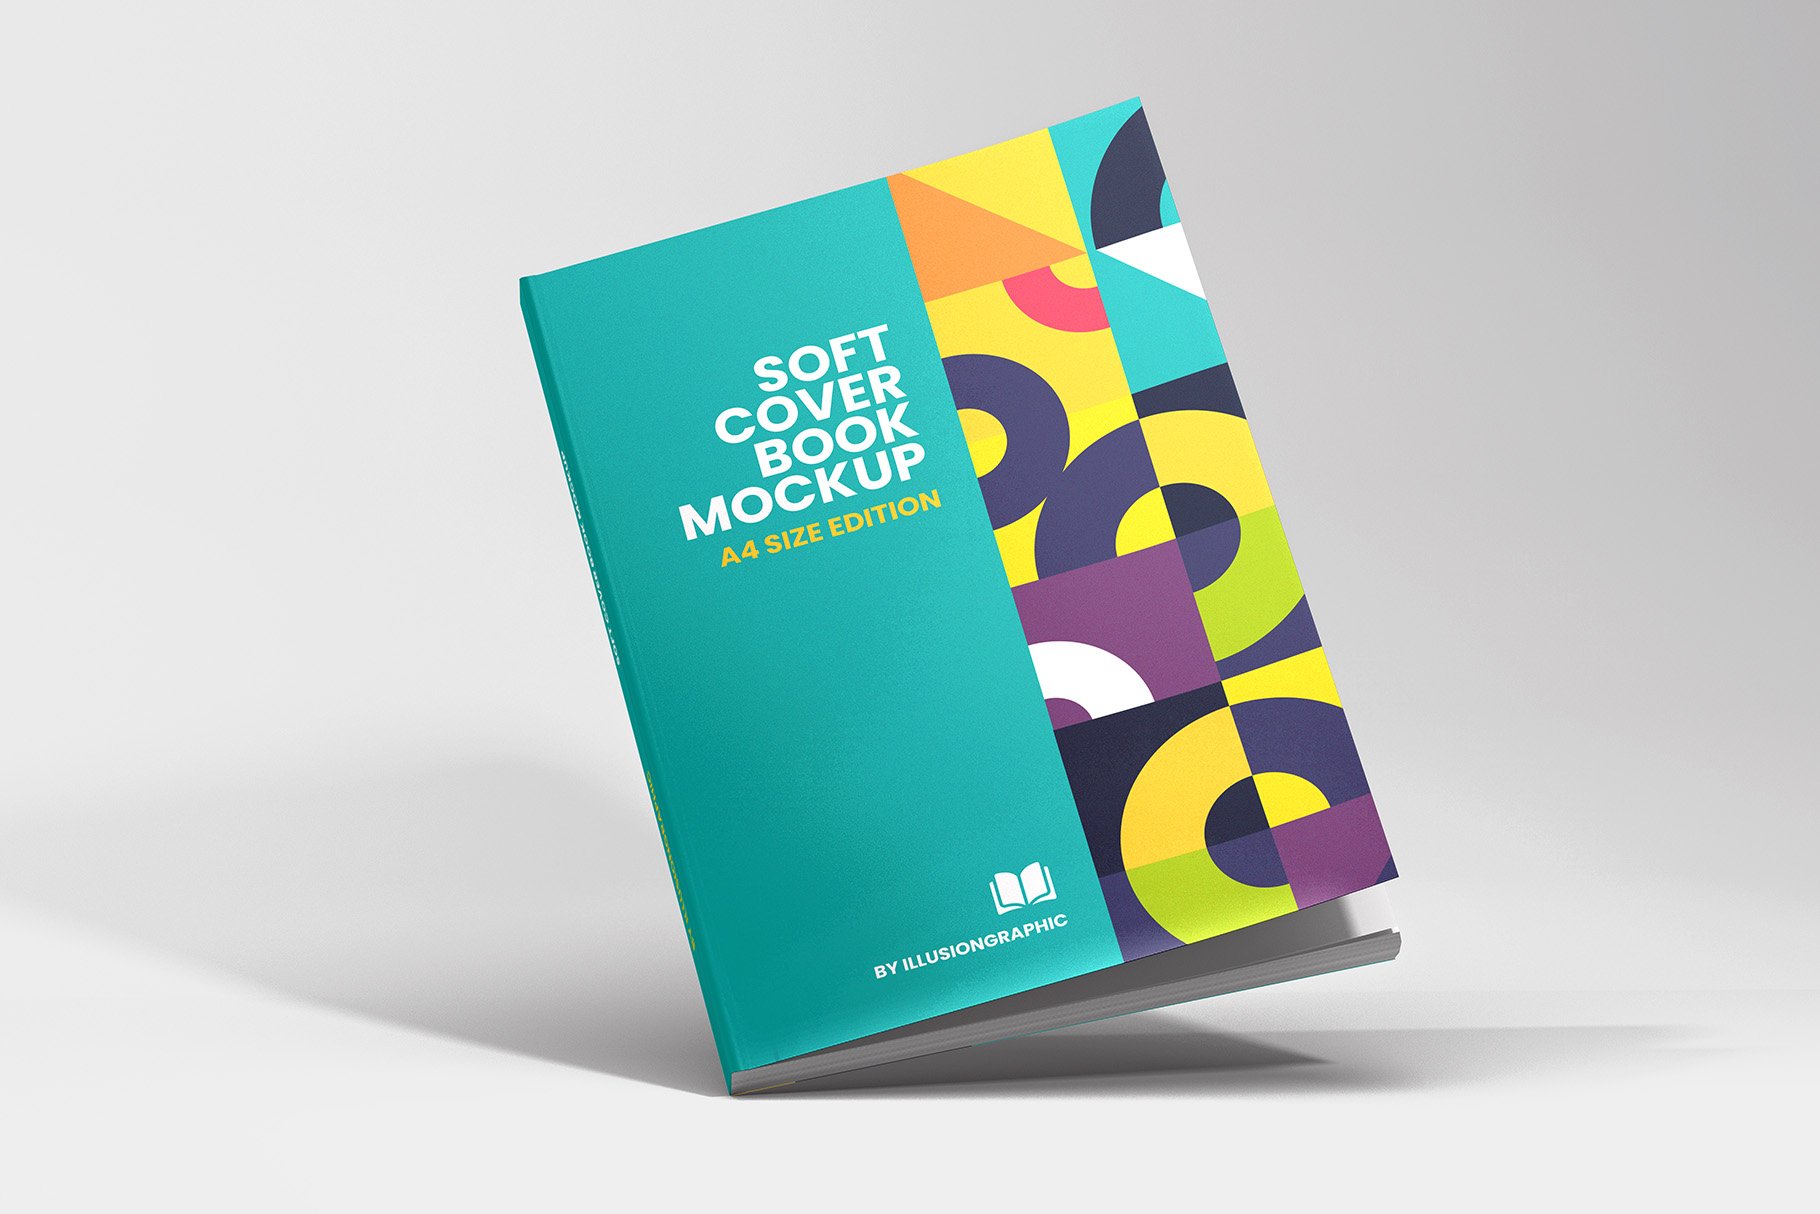 Soft Cover Book Mockup - A4 - 11 Views - Design Cuts